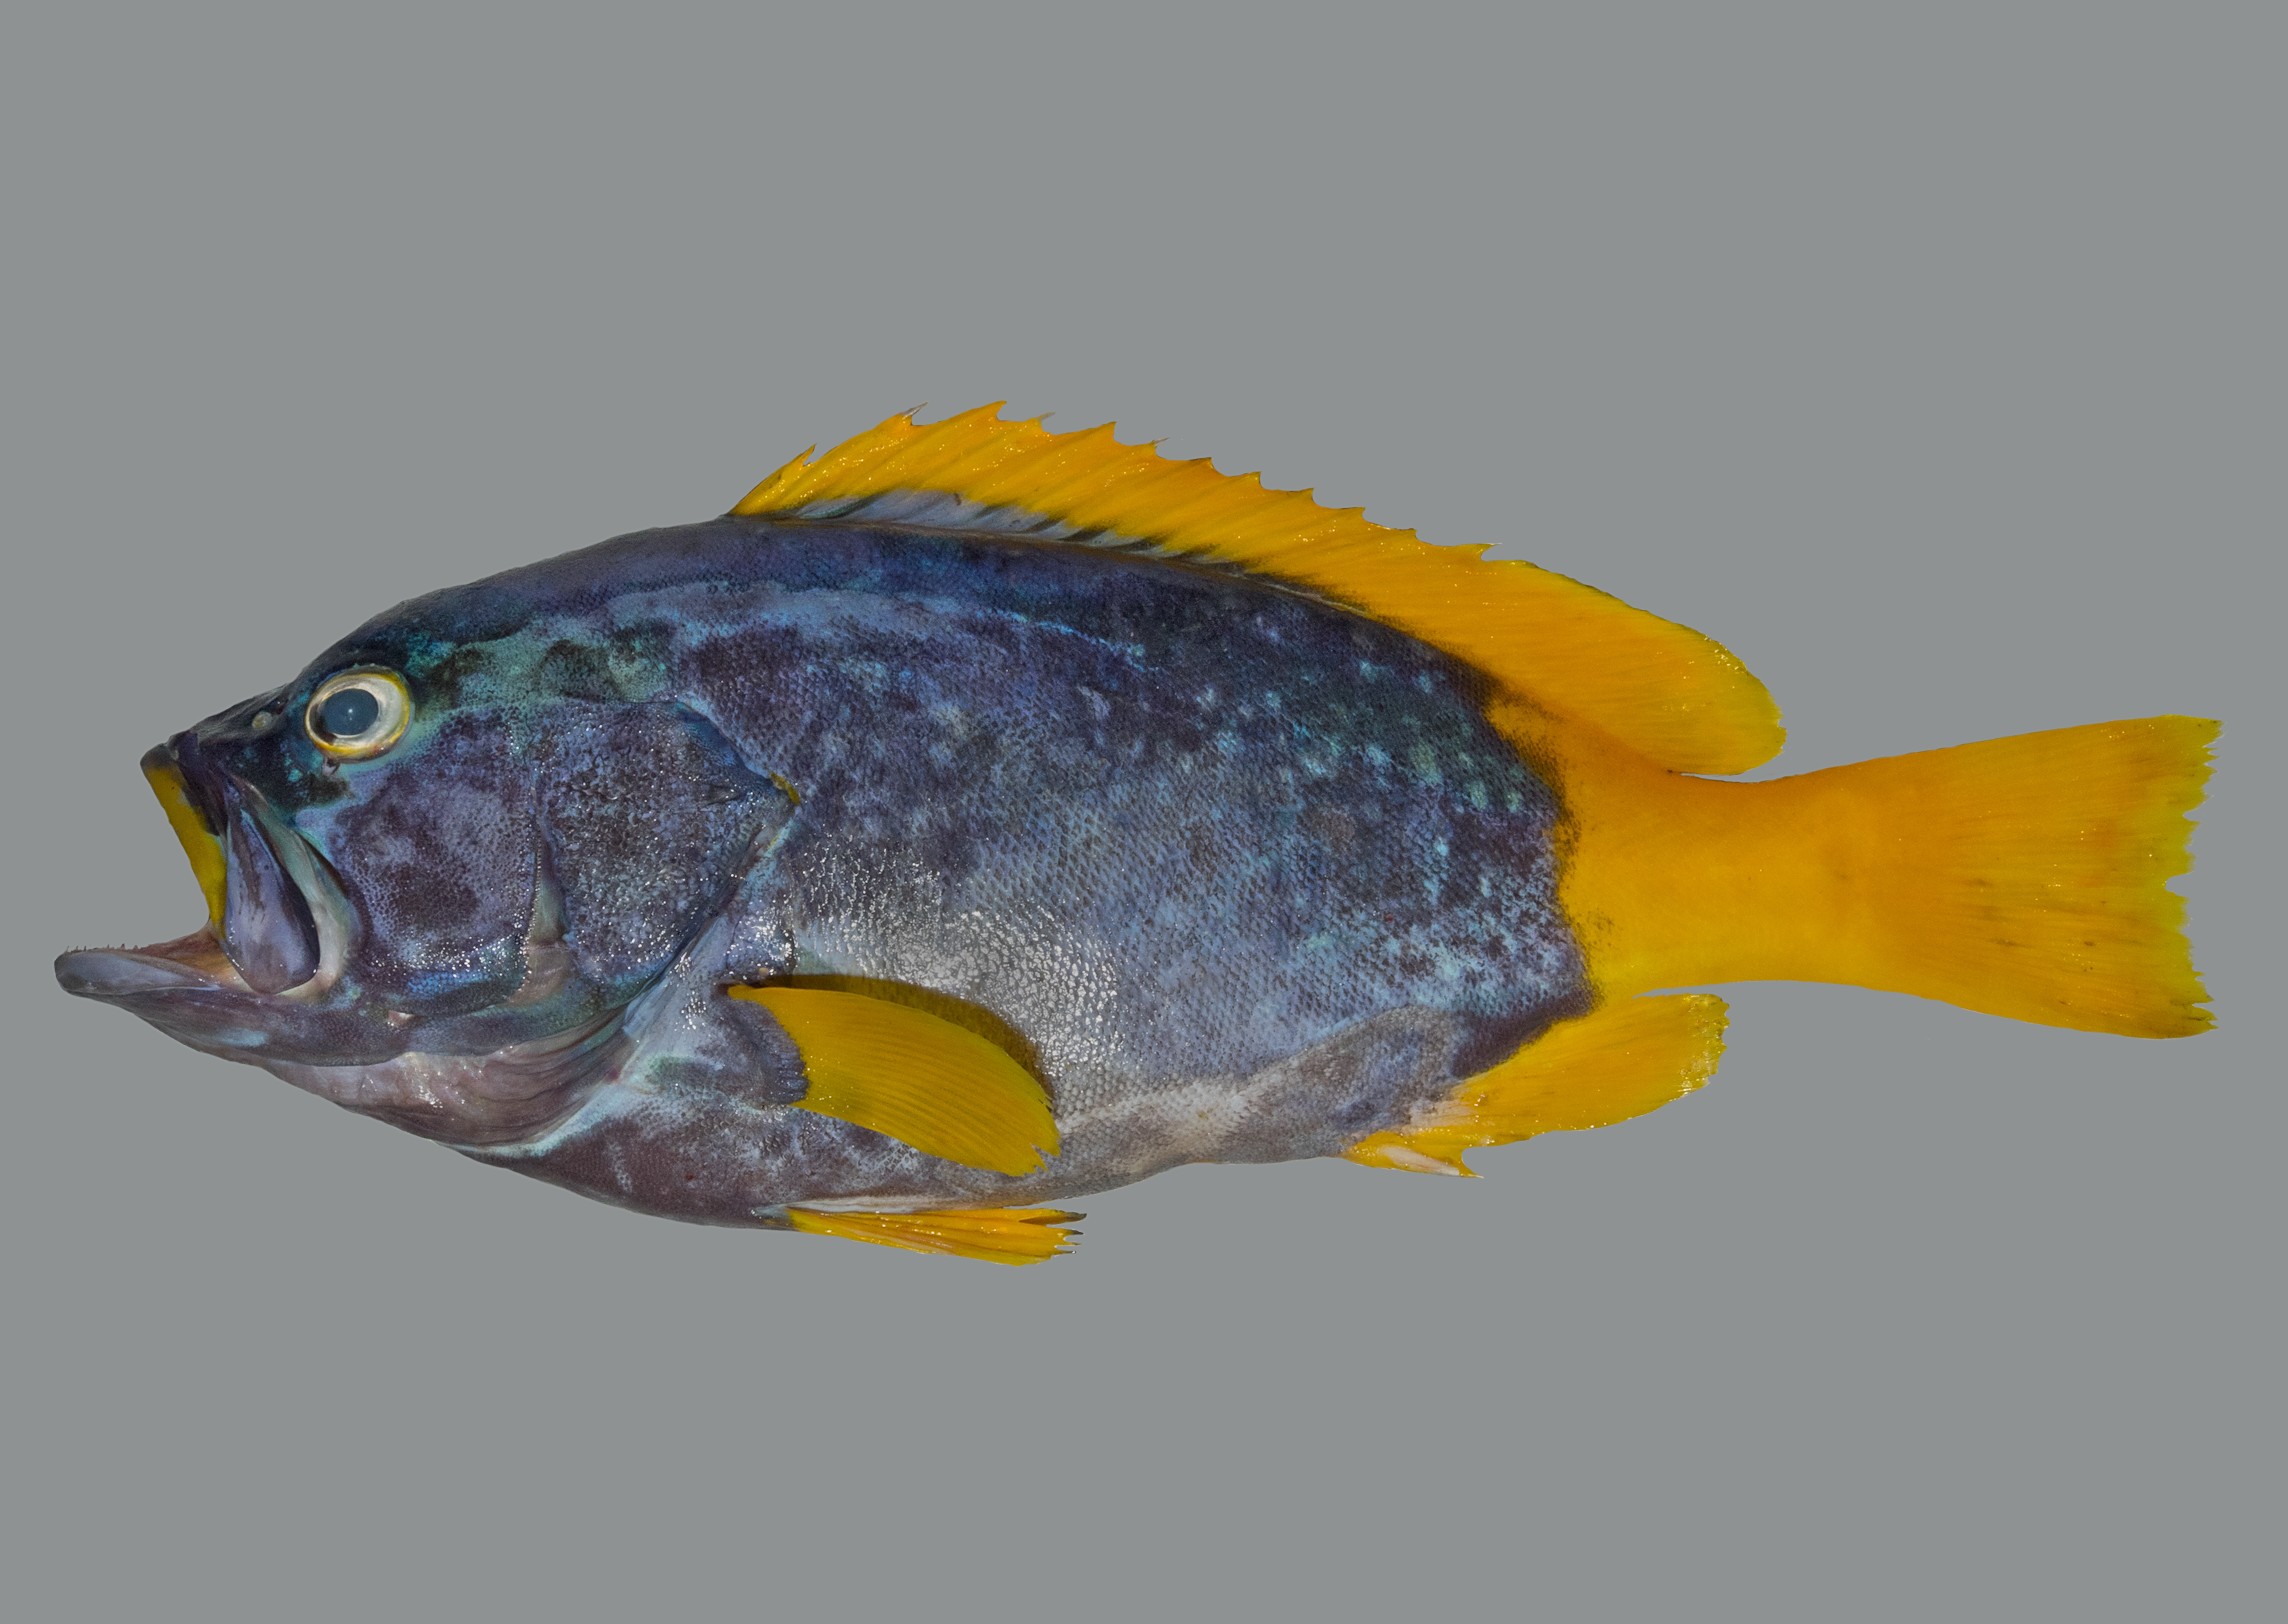 Epinephelus flavocaeruleus, subadult, 19 cm SL, Socotra Archipelago: Abd Al-Kuri Island; S.V. Bogorodsky & U. Zajonz